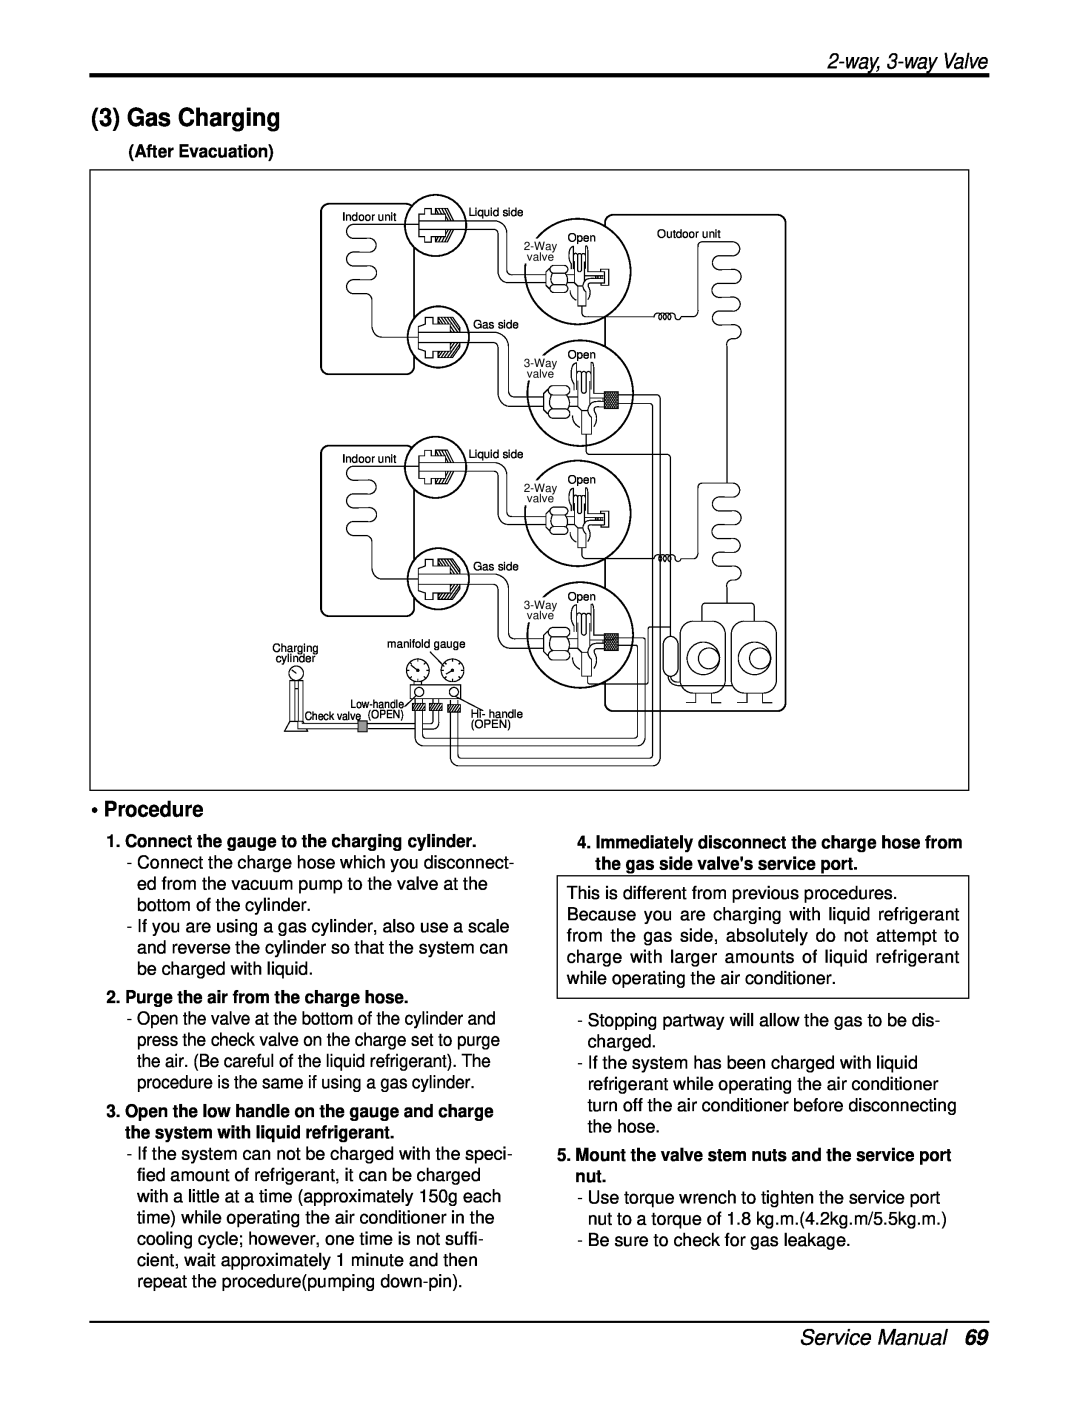 Heat Controller DMH18DB-1 manual Gas Charging, 2-way, 3-wayValve, Service Manual, After Evacuation 